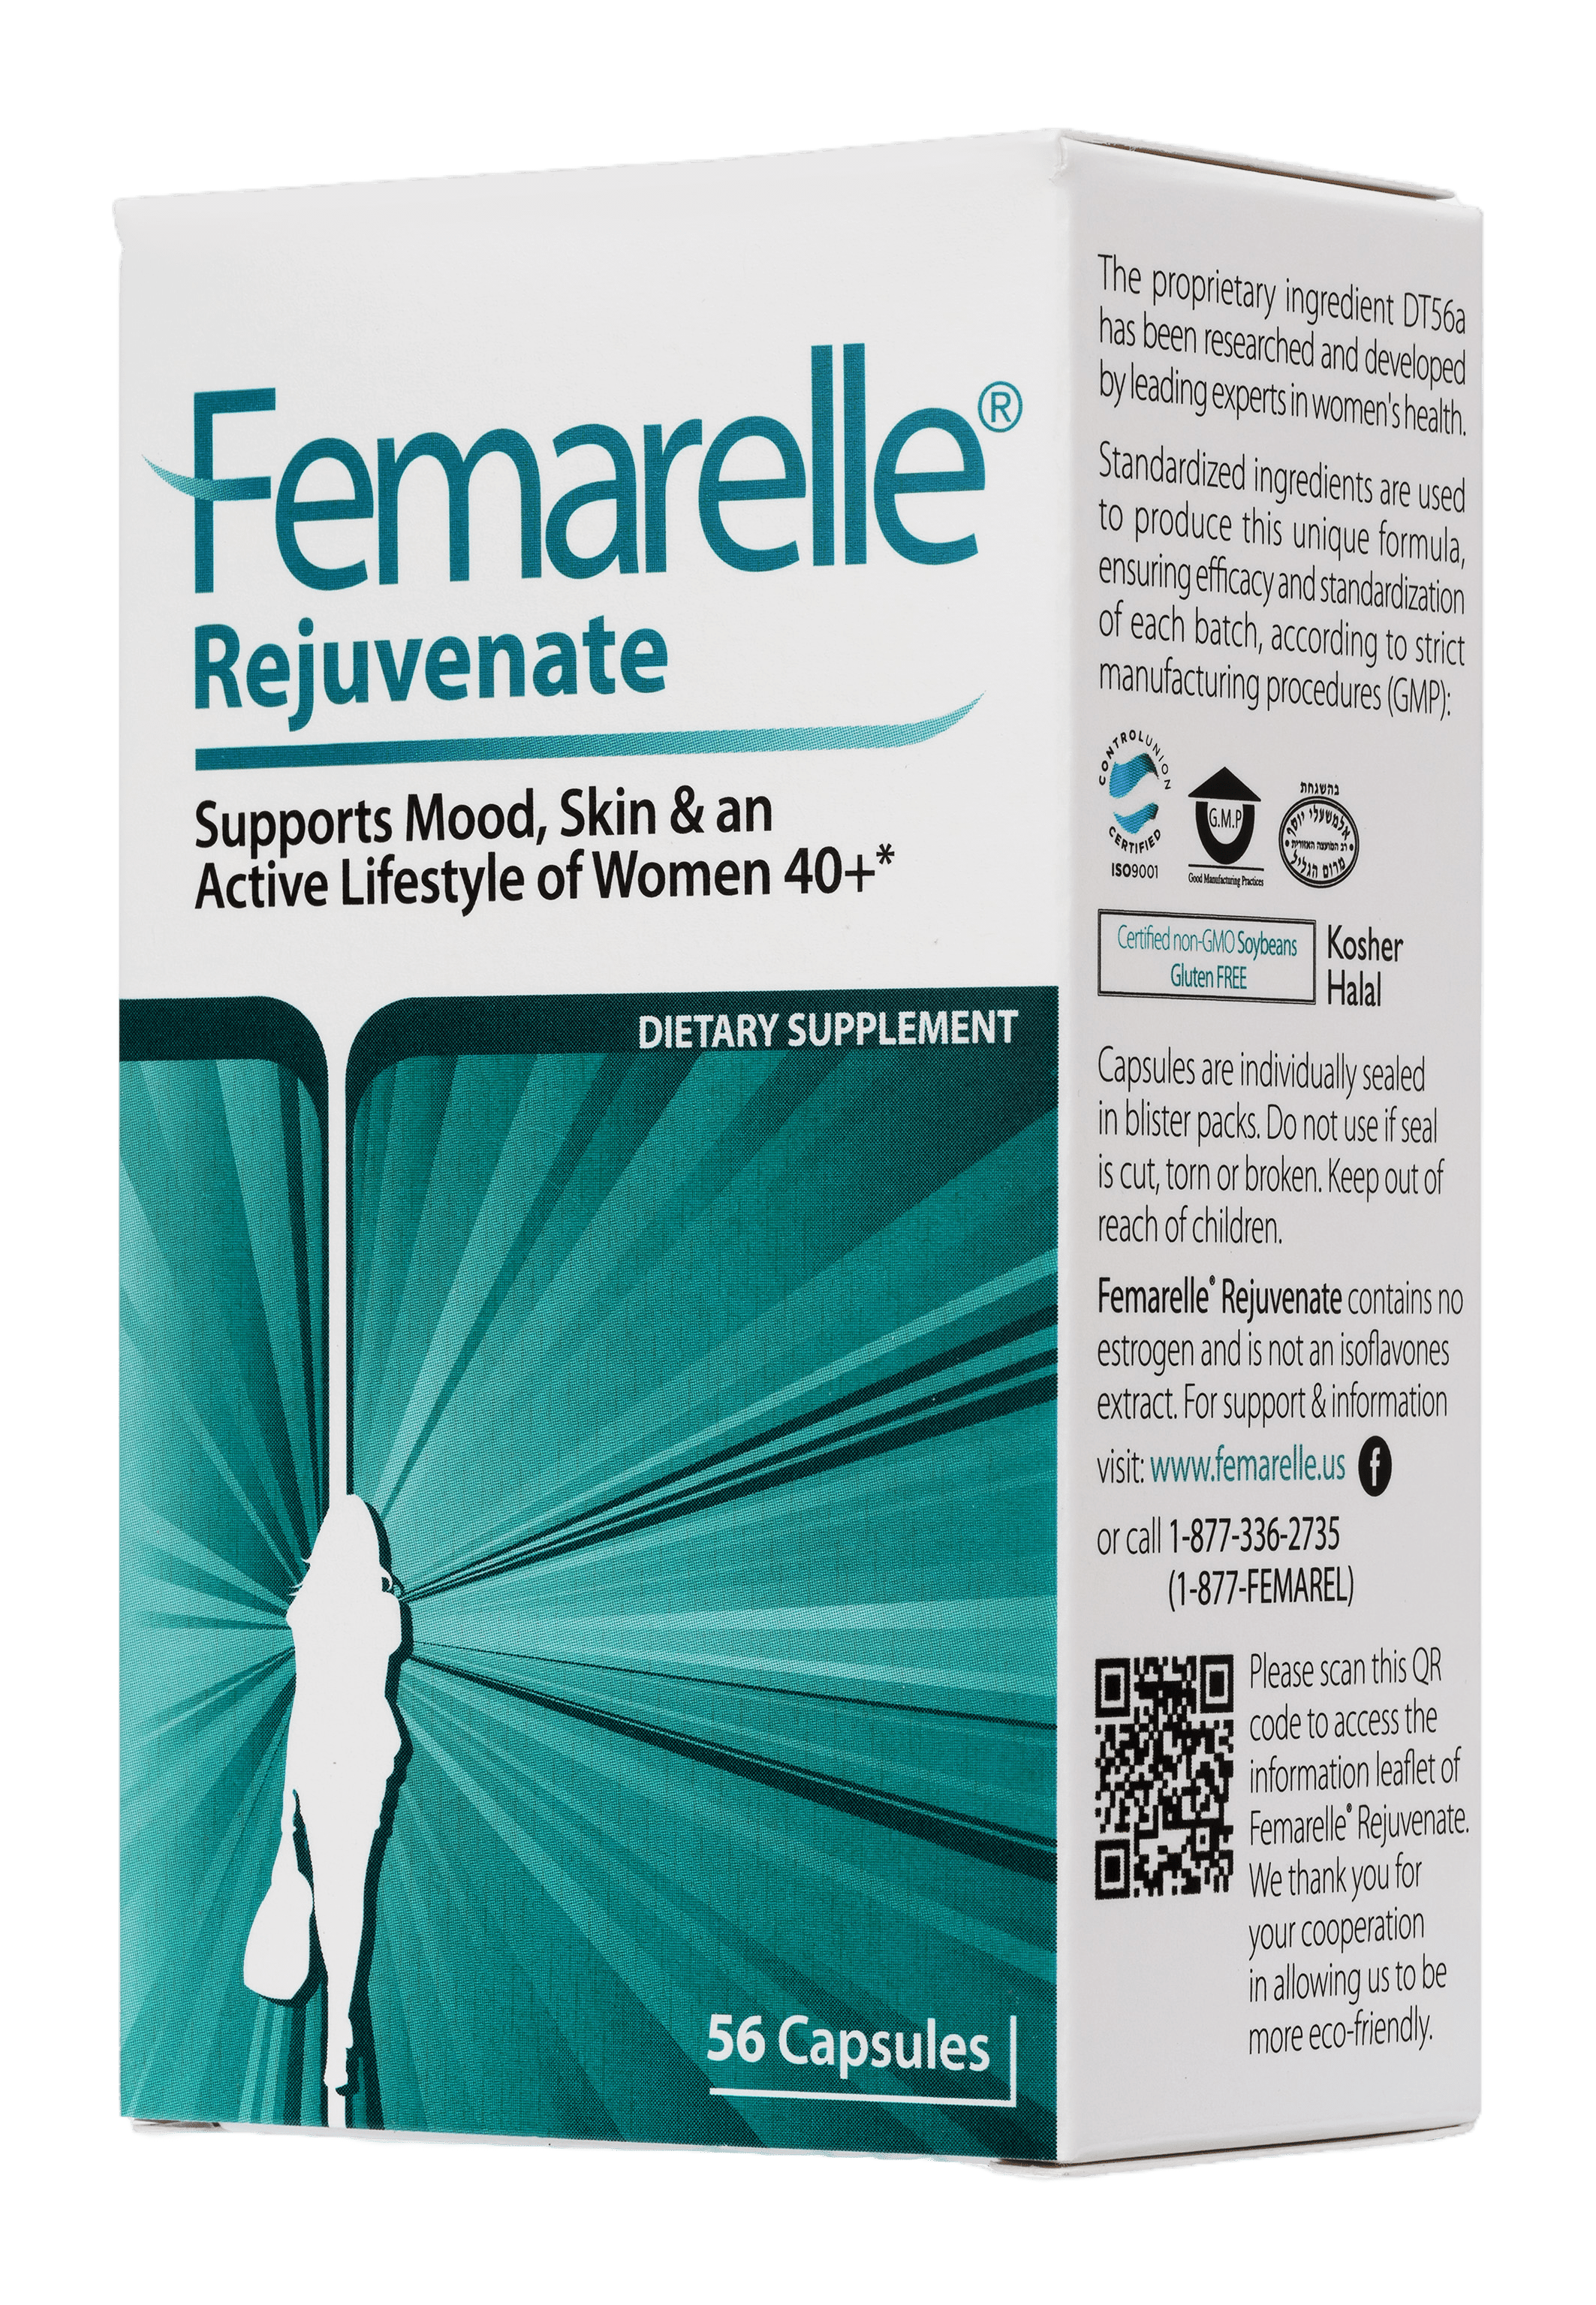 Femarelle Rejuvenate, a natural premenopause relief supplement